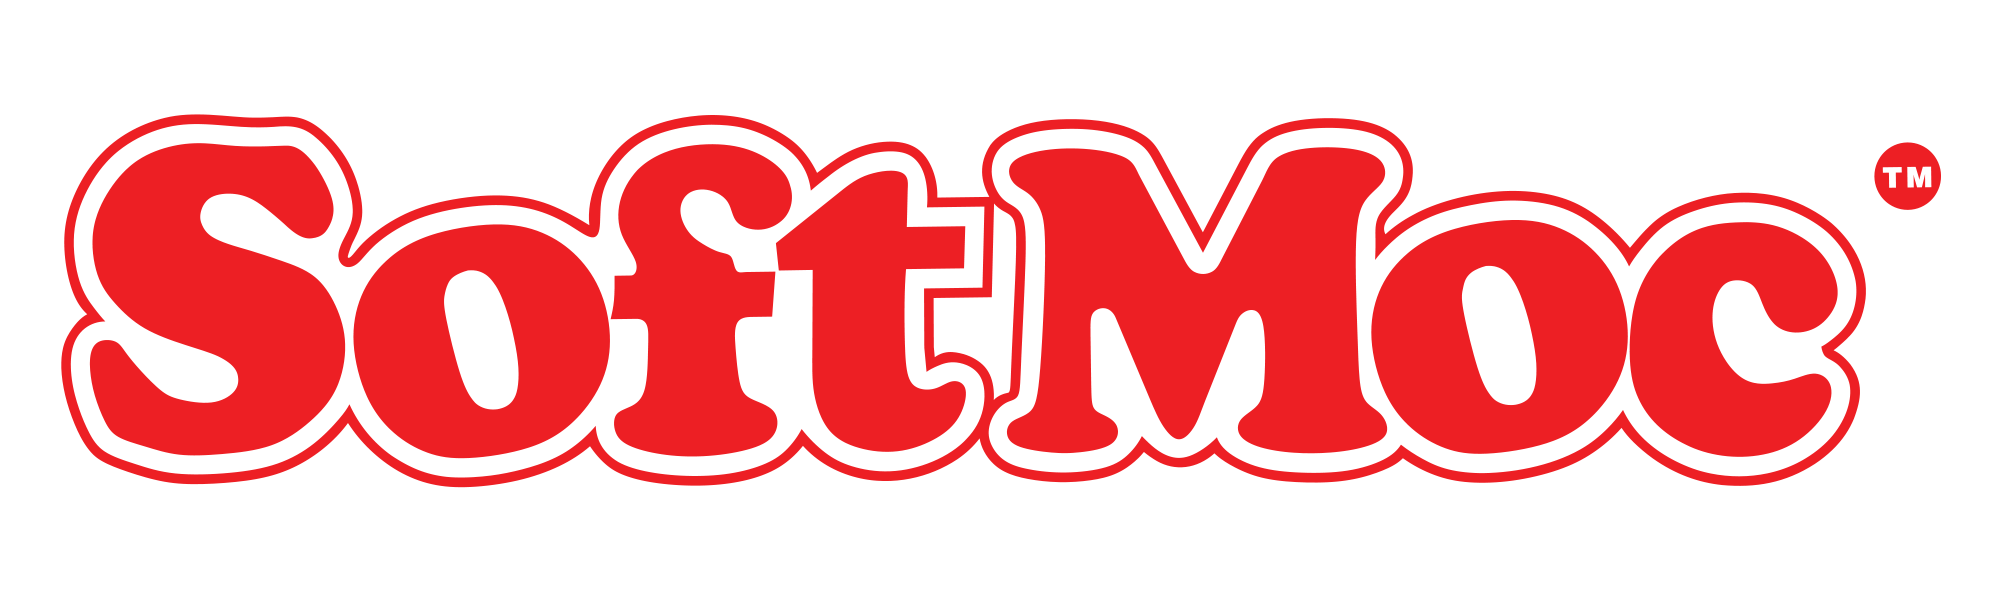 Softmoc Logo